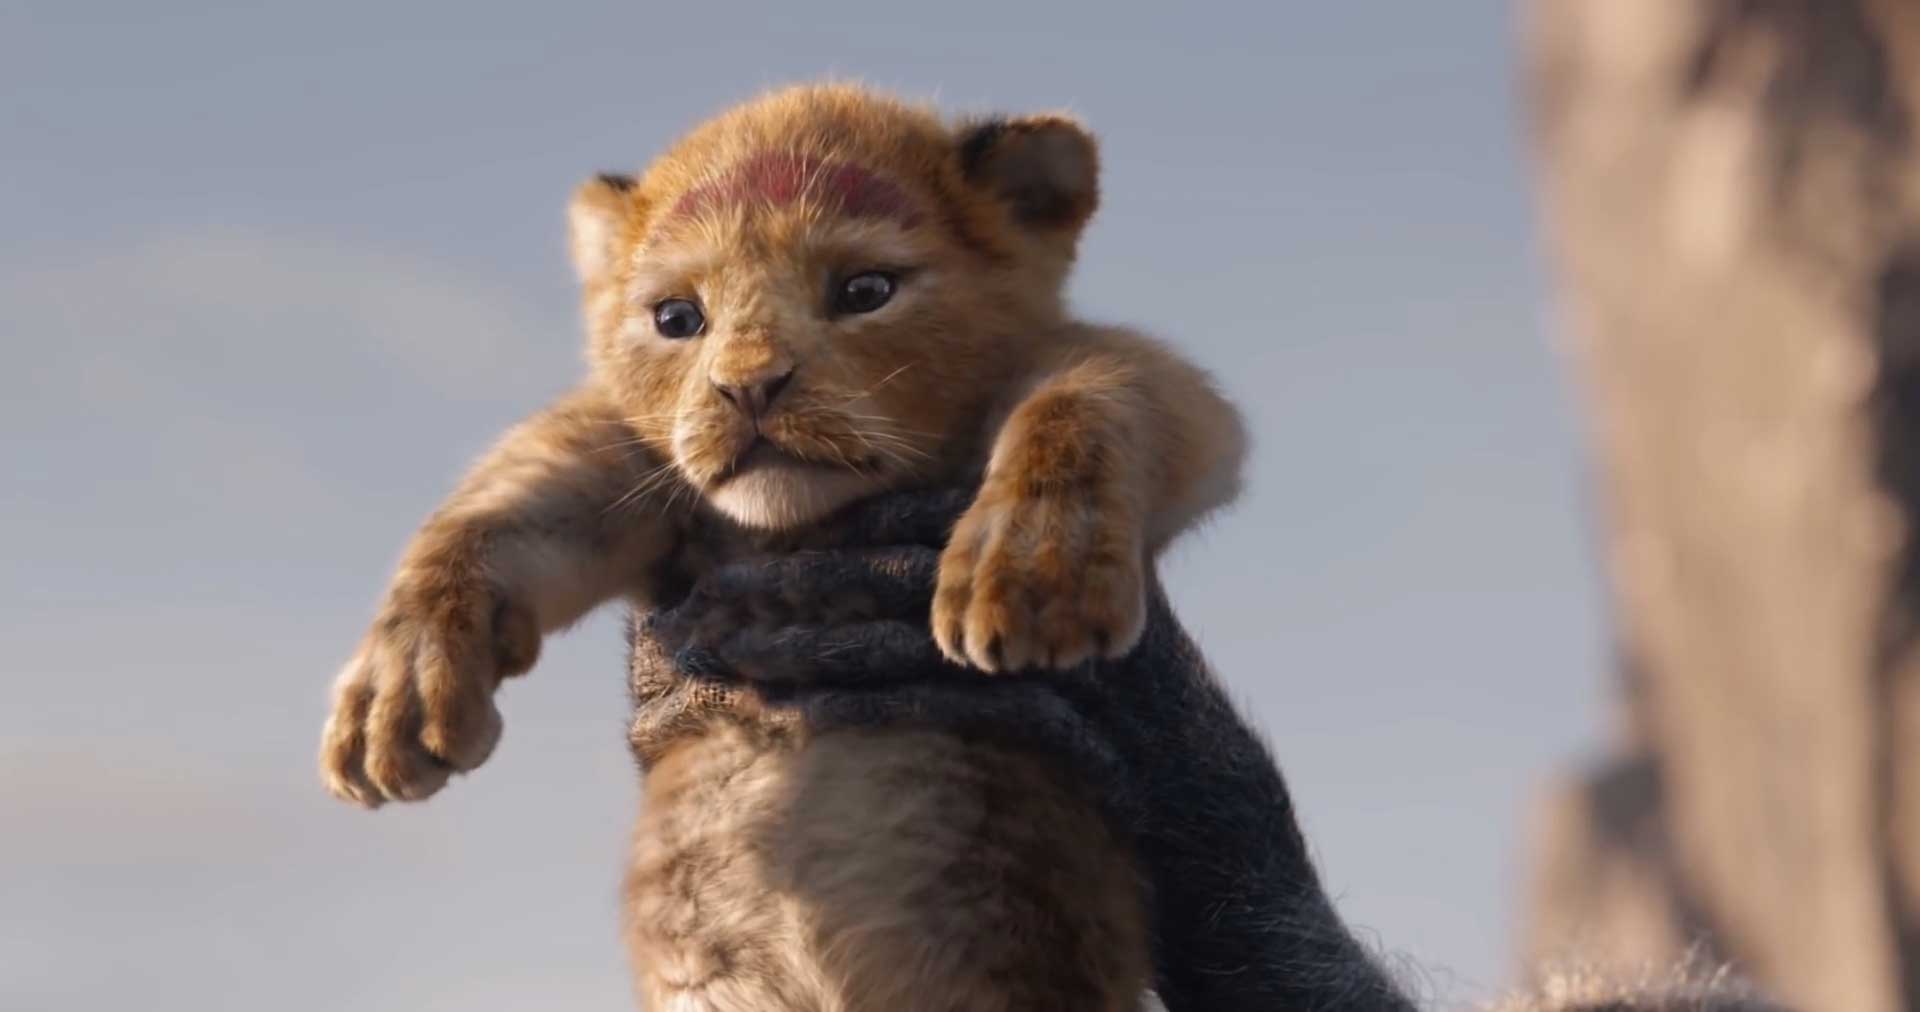 The Lion King 2019 Still - Simba Circle of Life